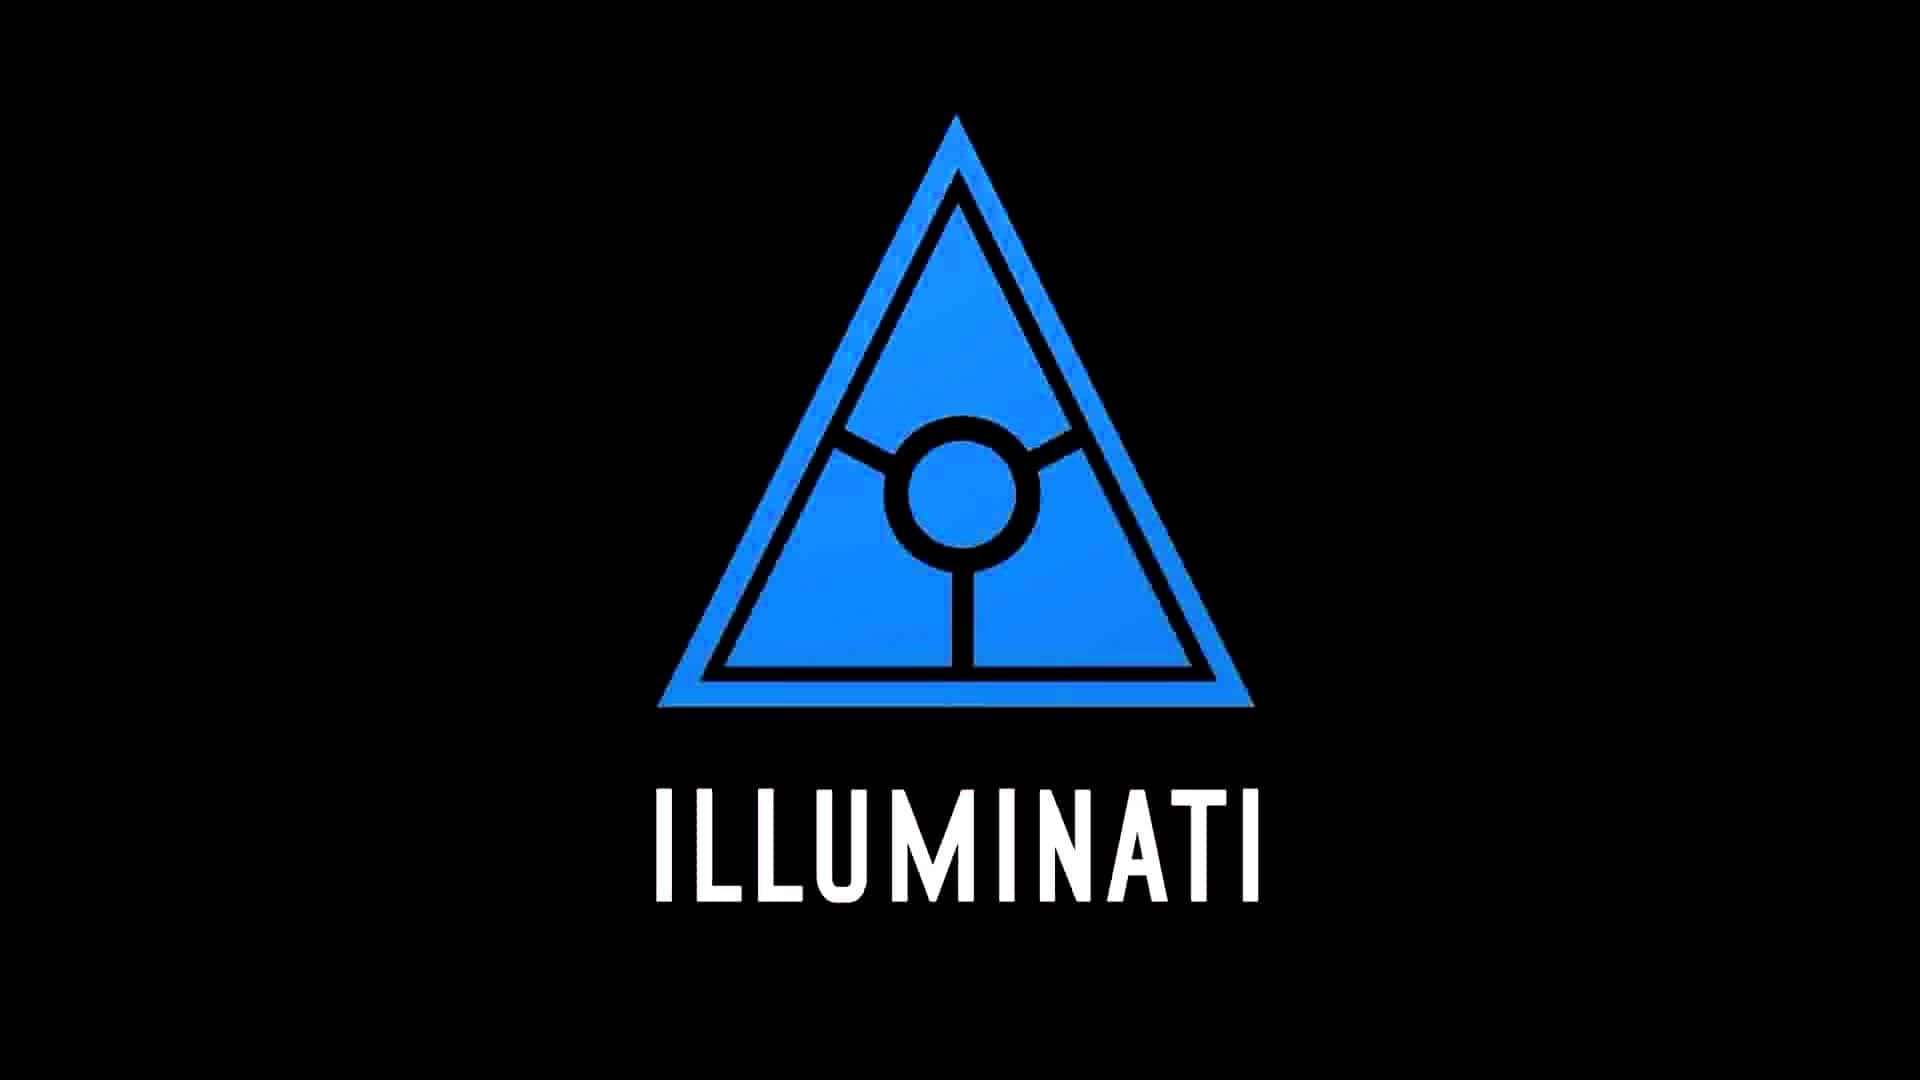 The majestic eye of the Illuminati